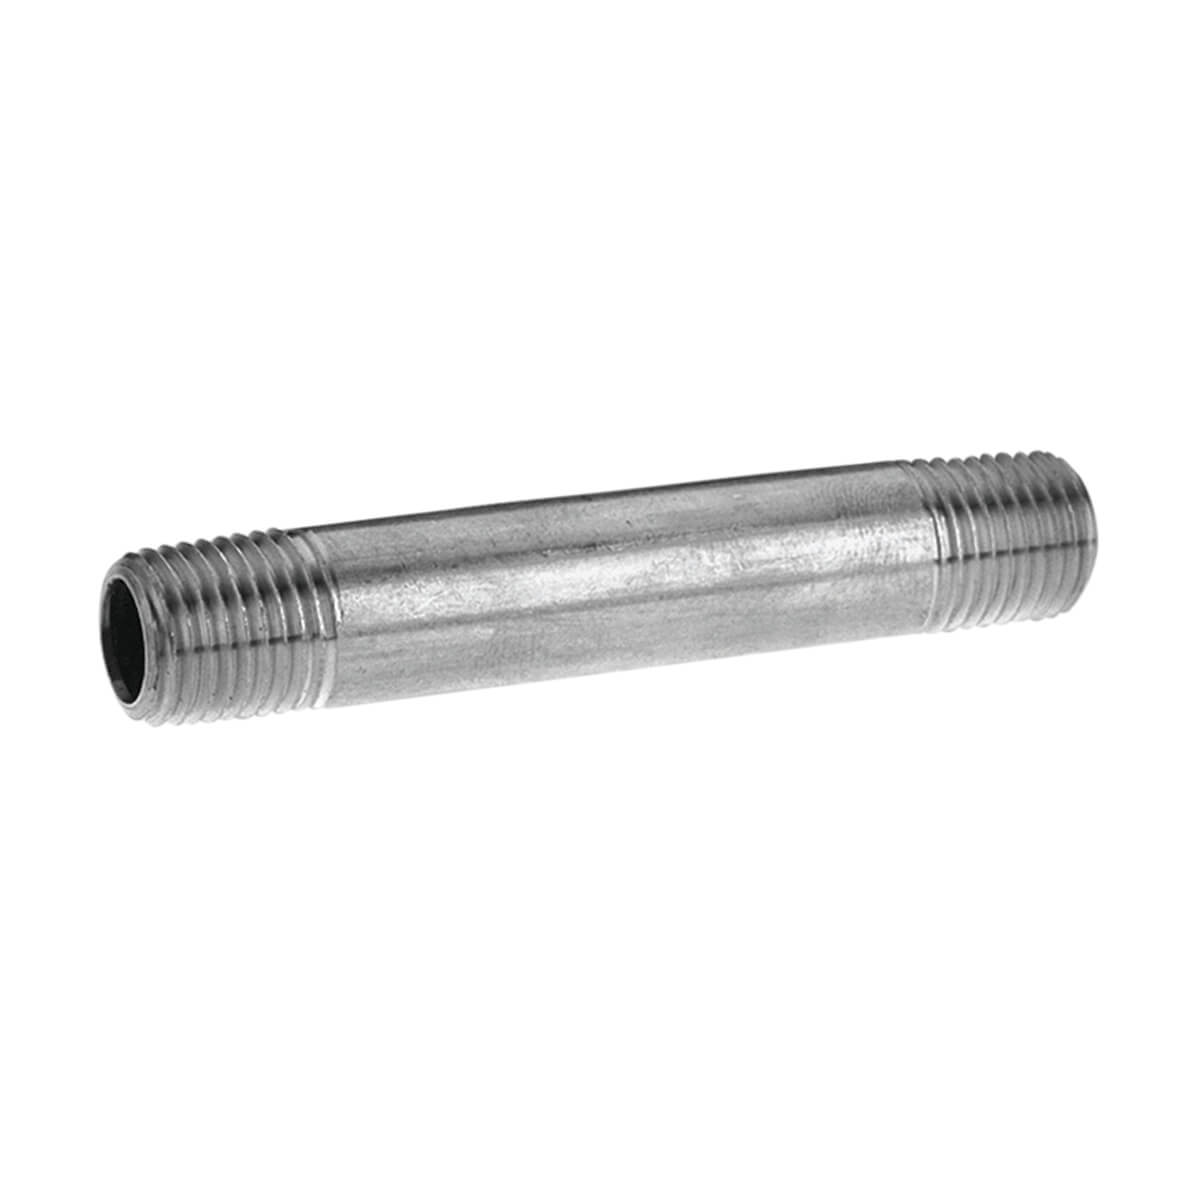 Pipe Nipple Galvanized Steel - 1-in x 2-1/2-in